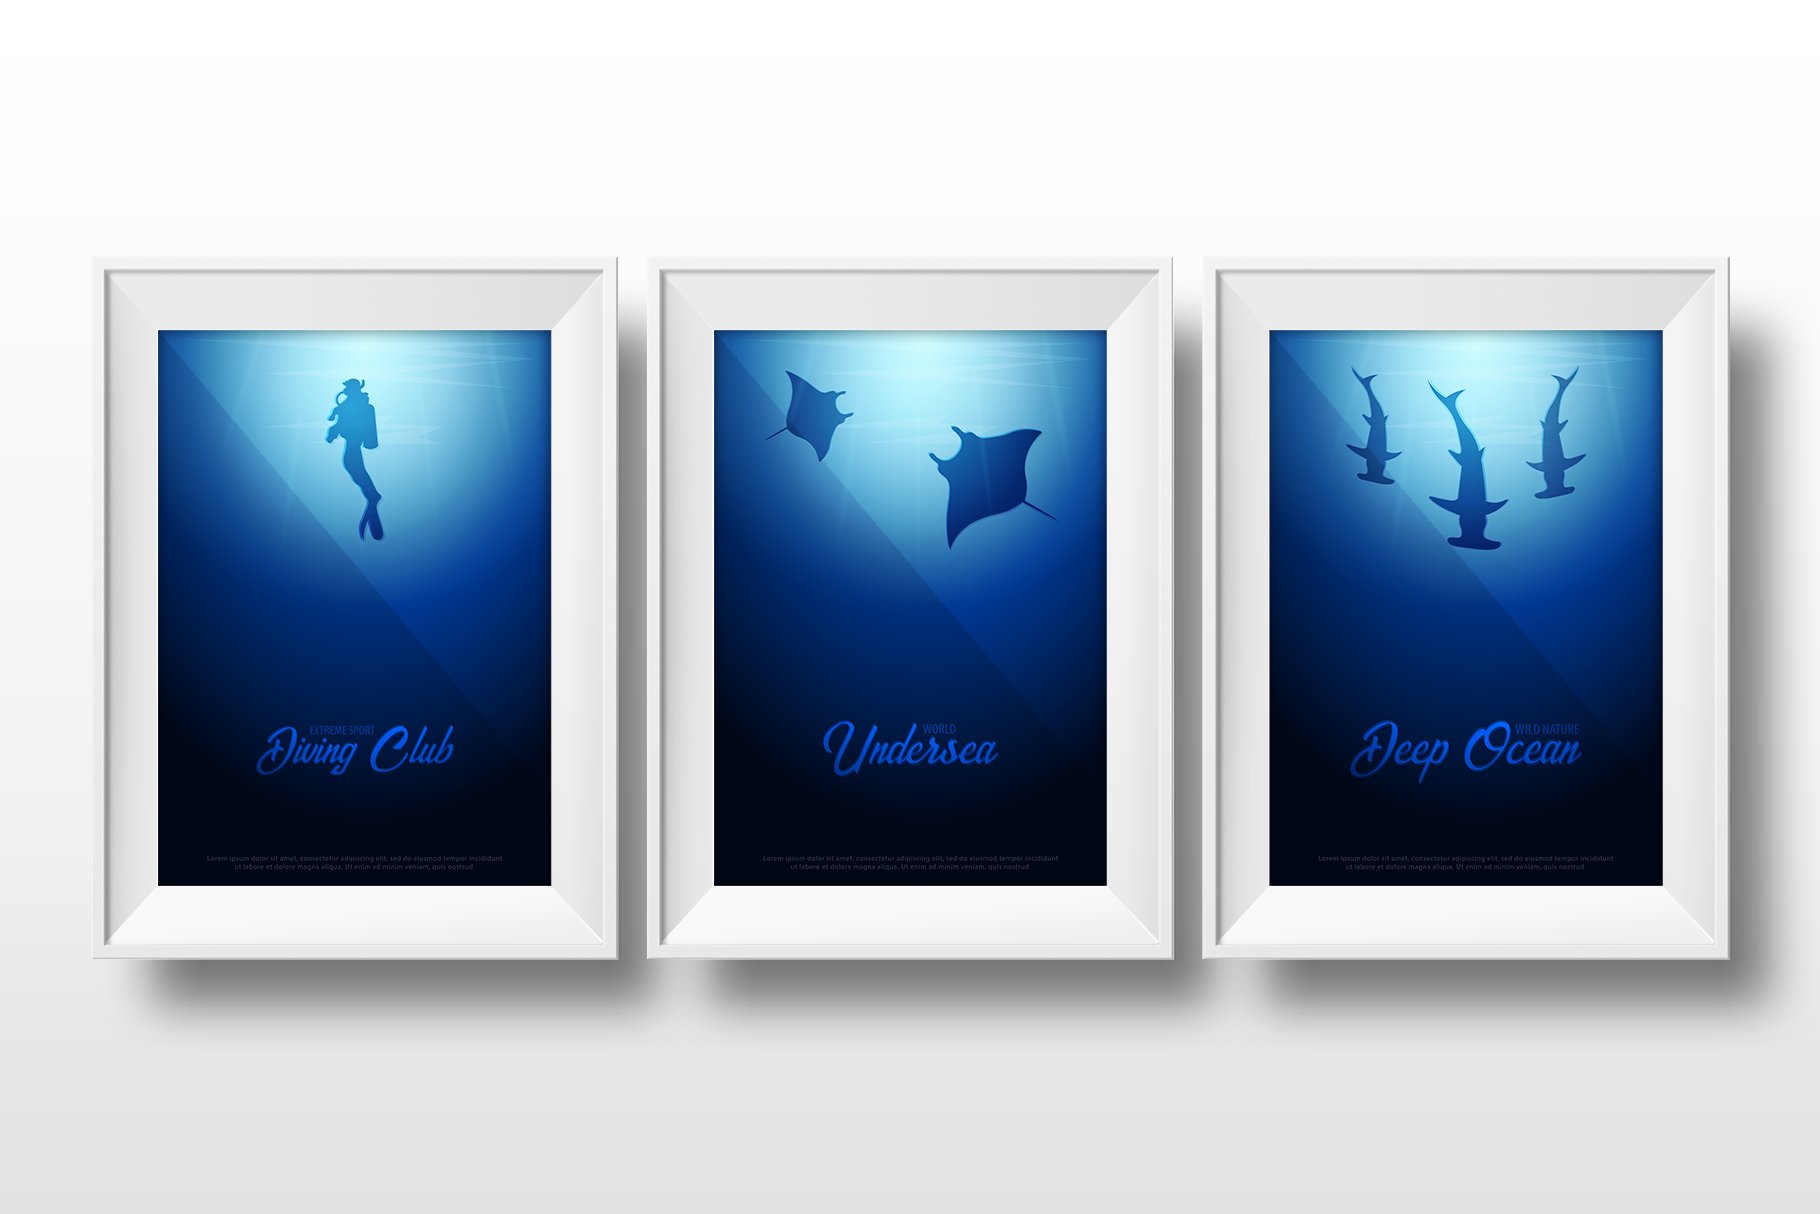 Deep Ocean banners preview image.